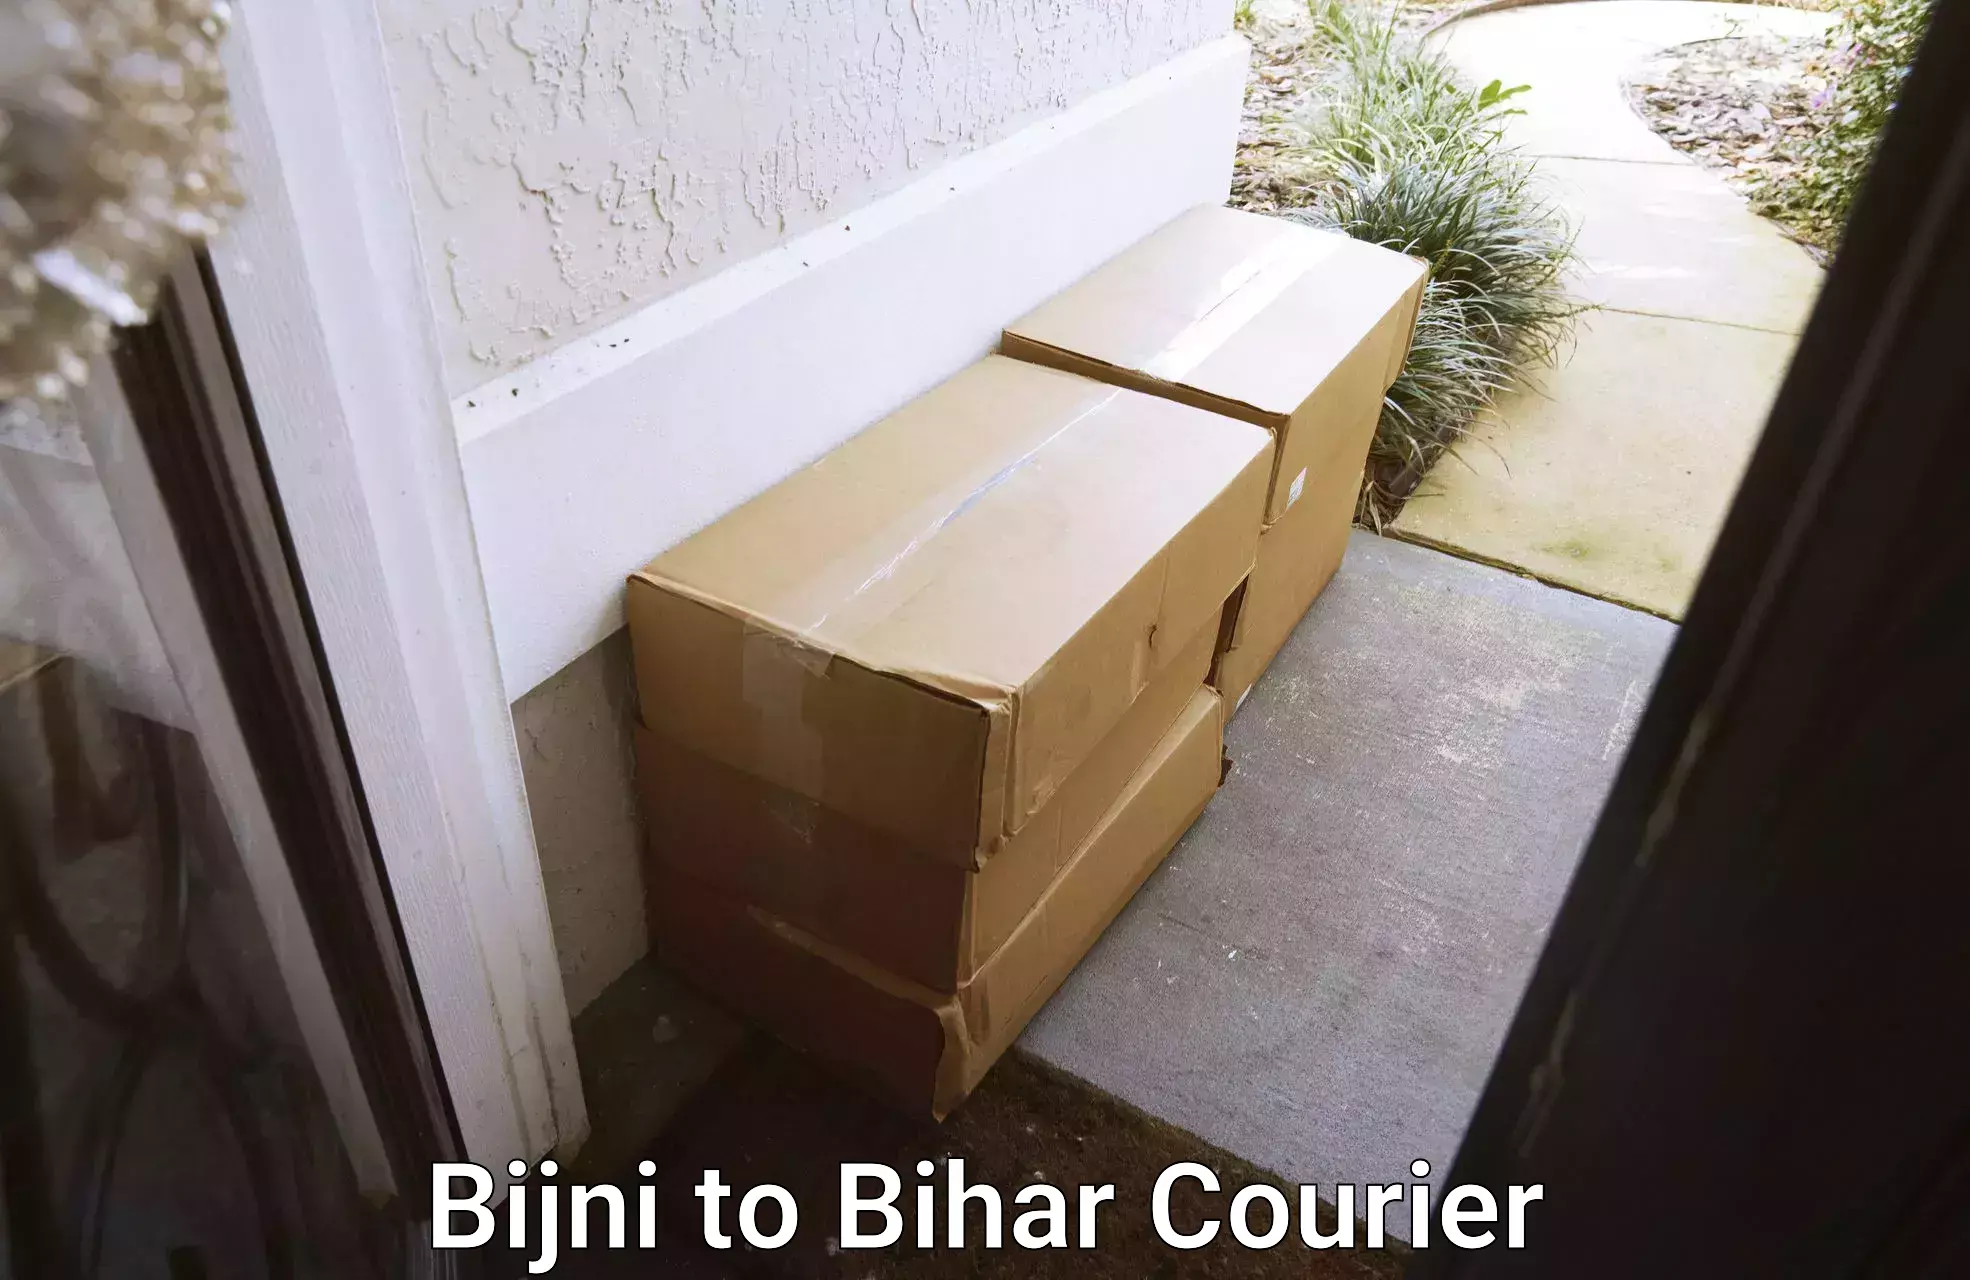 24-hour courier service Bijni to Bihar